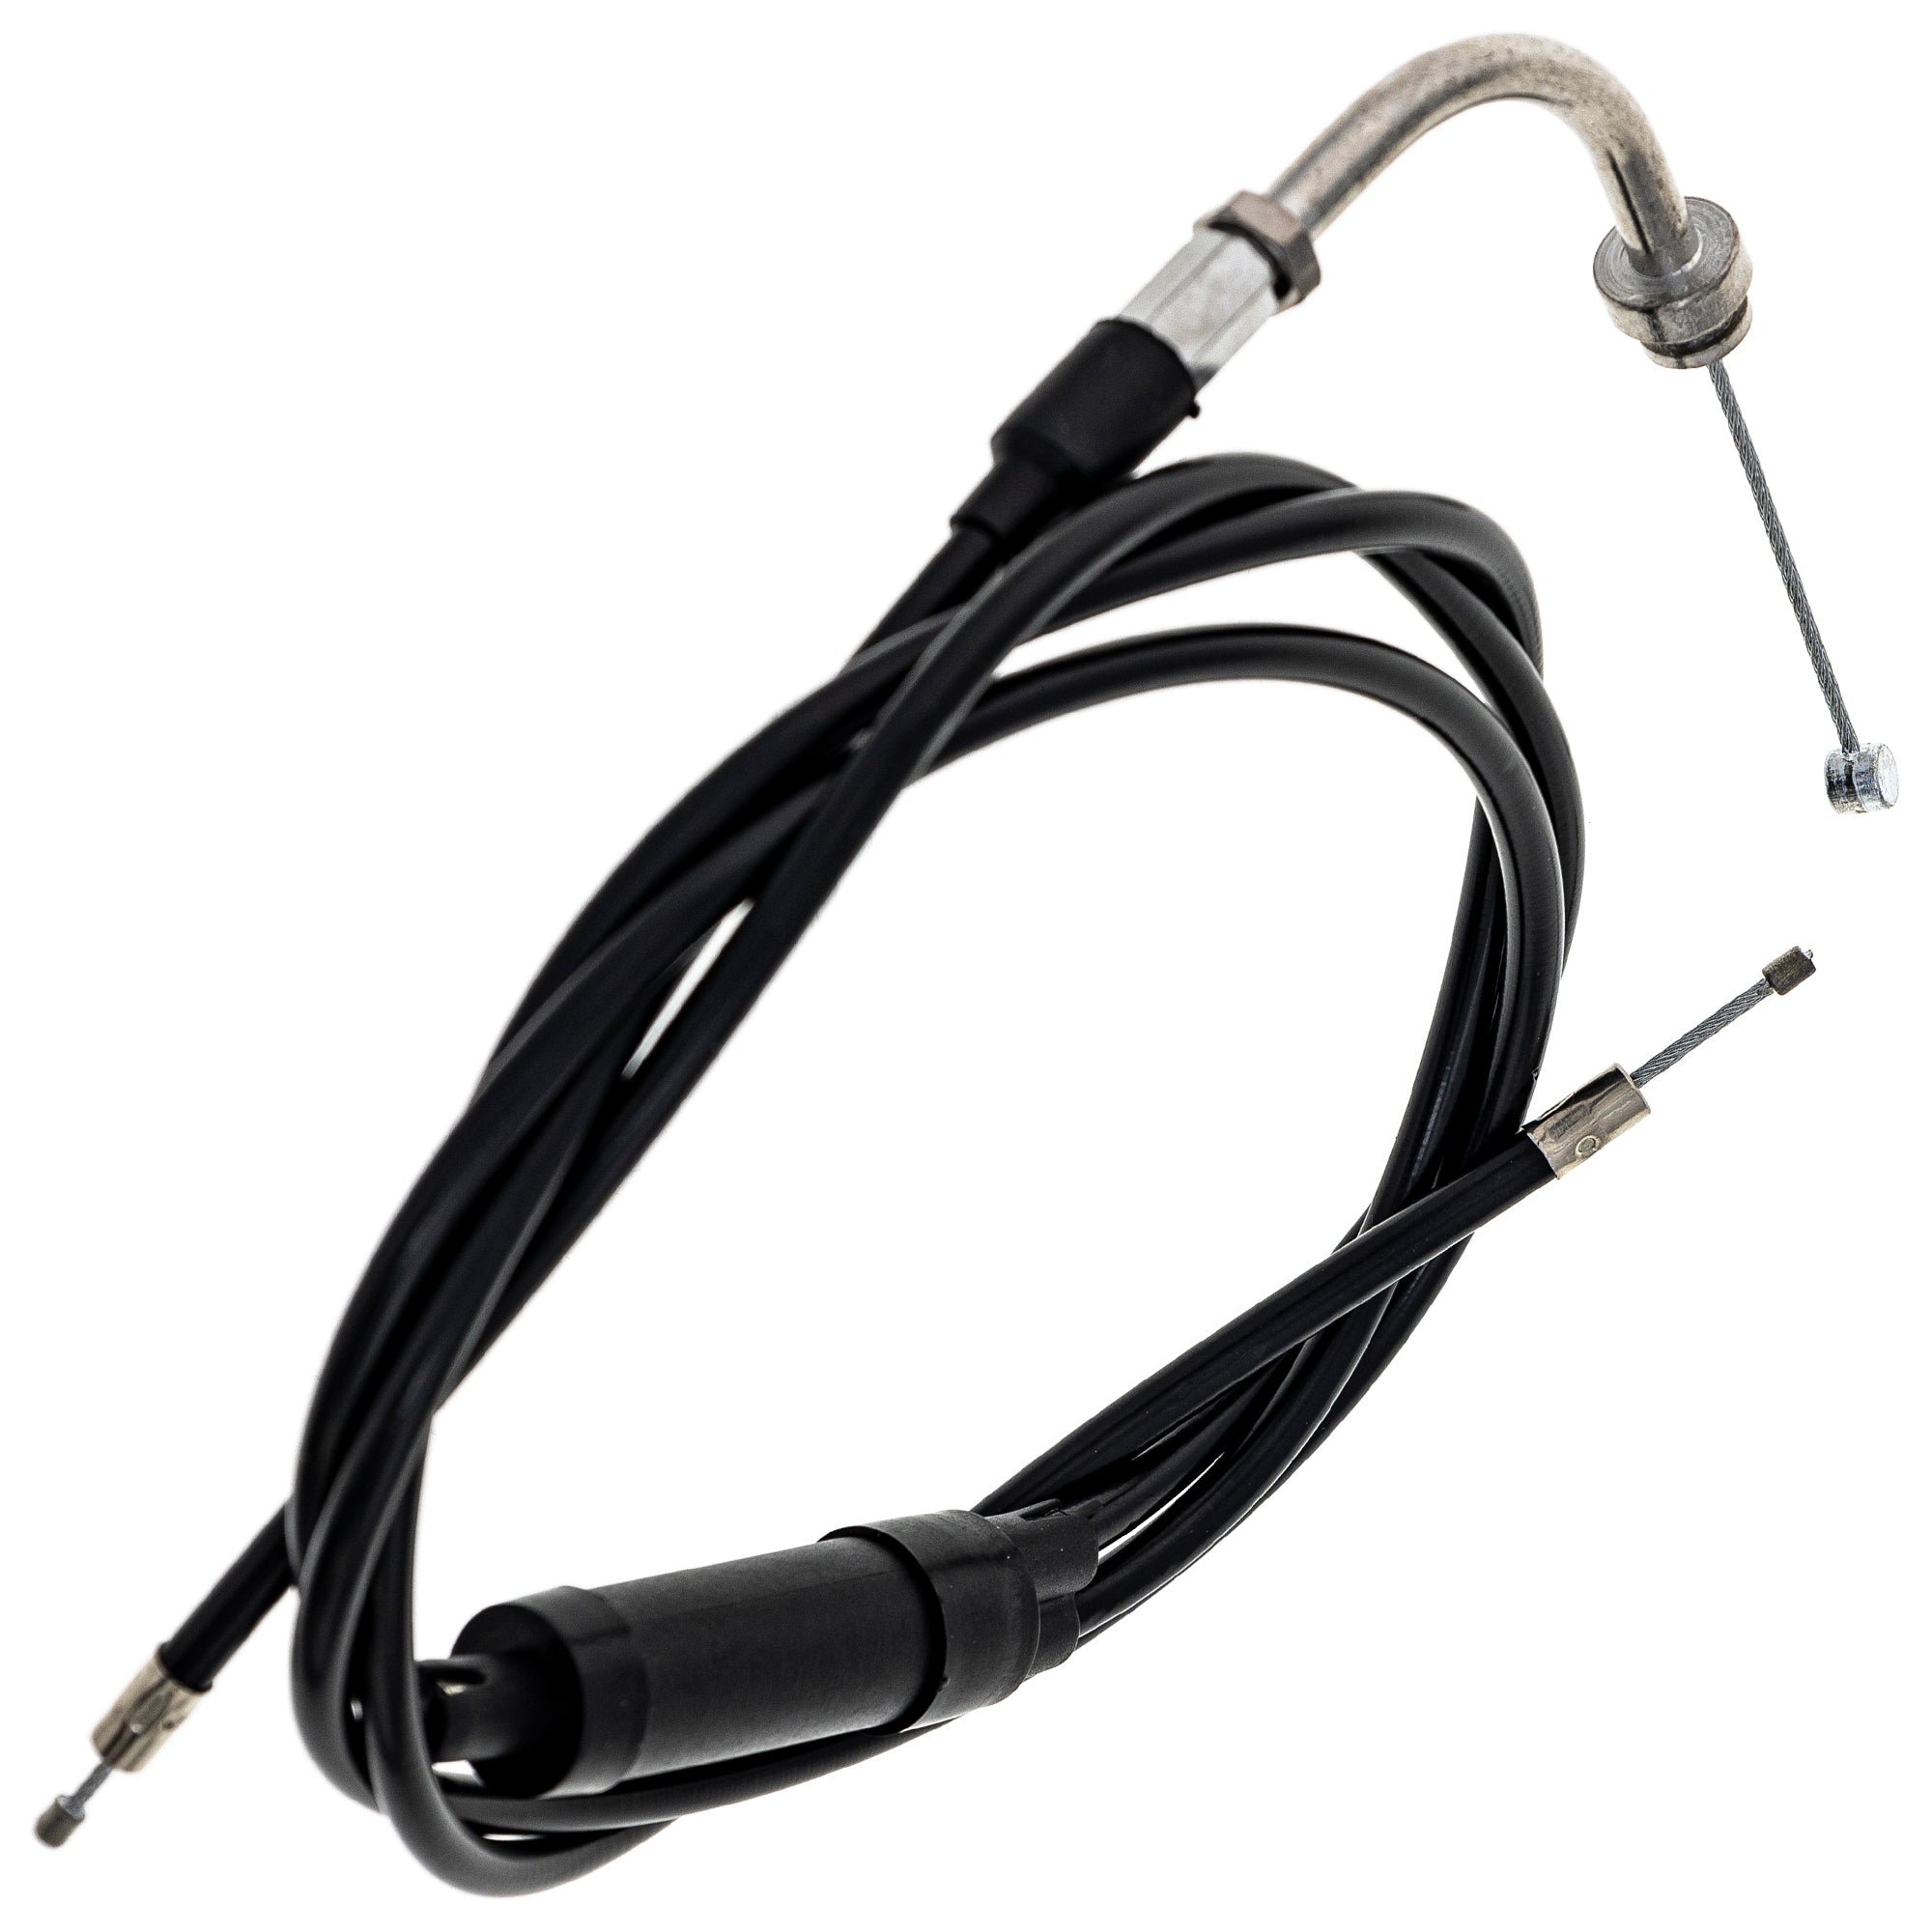 Throttle Cable for Kawasaki G3 G5 KD100 KD80 KE100 54012-115 54012-109